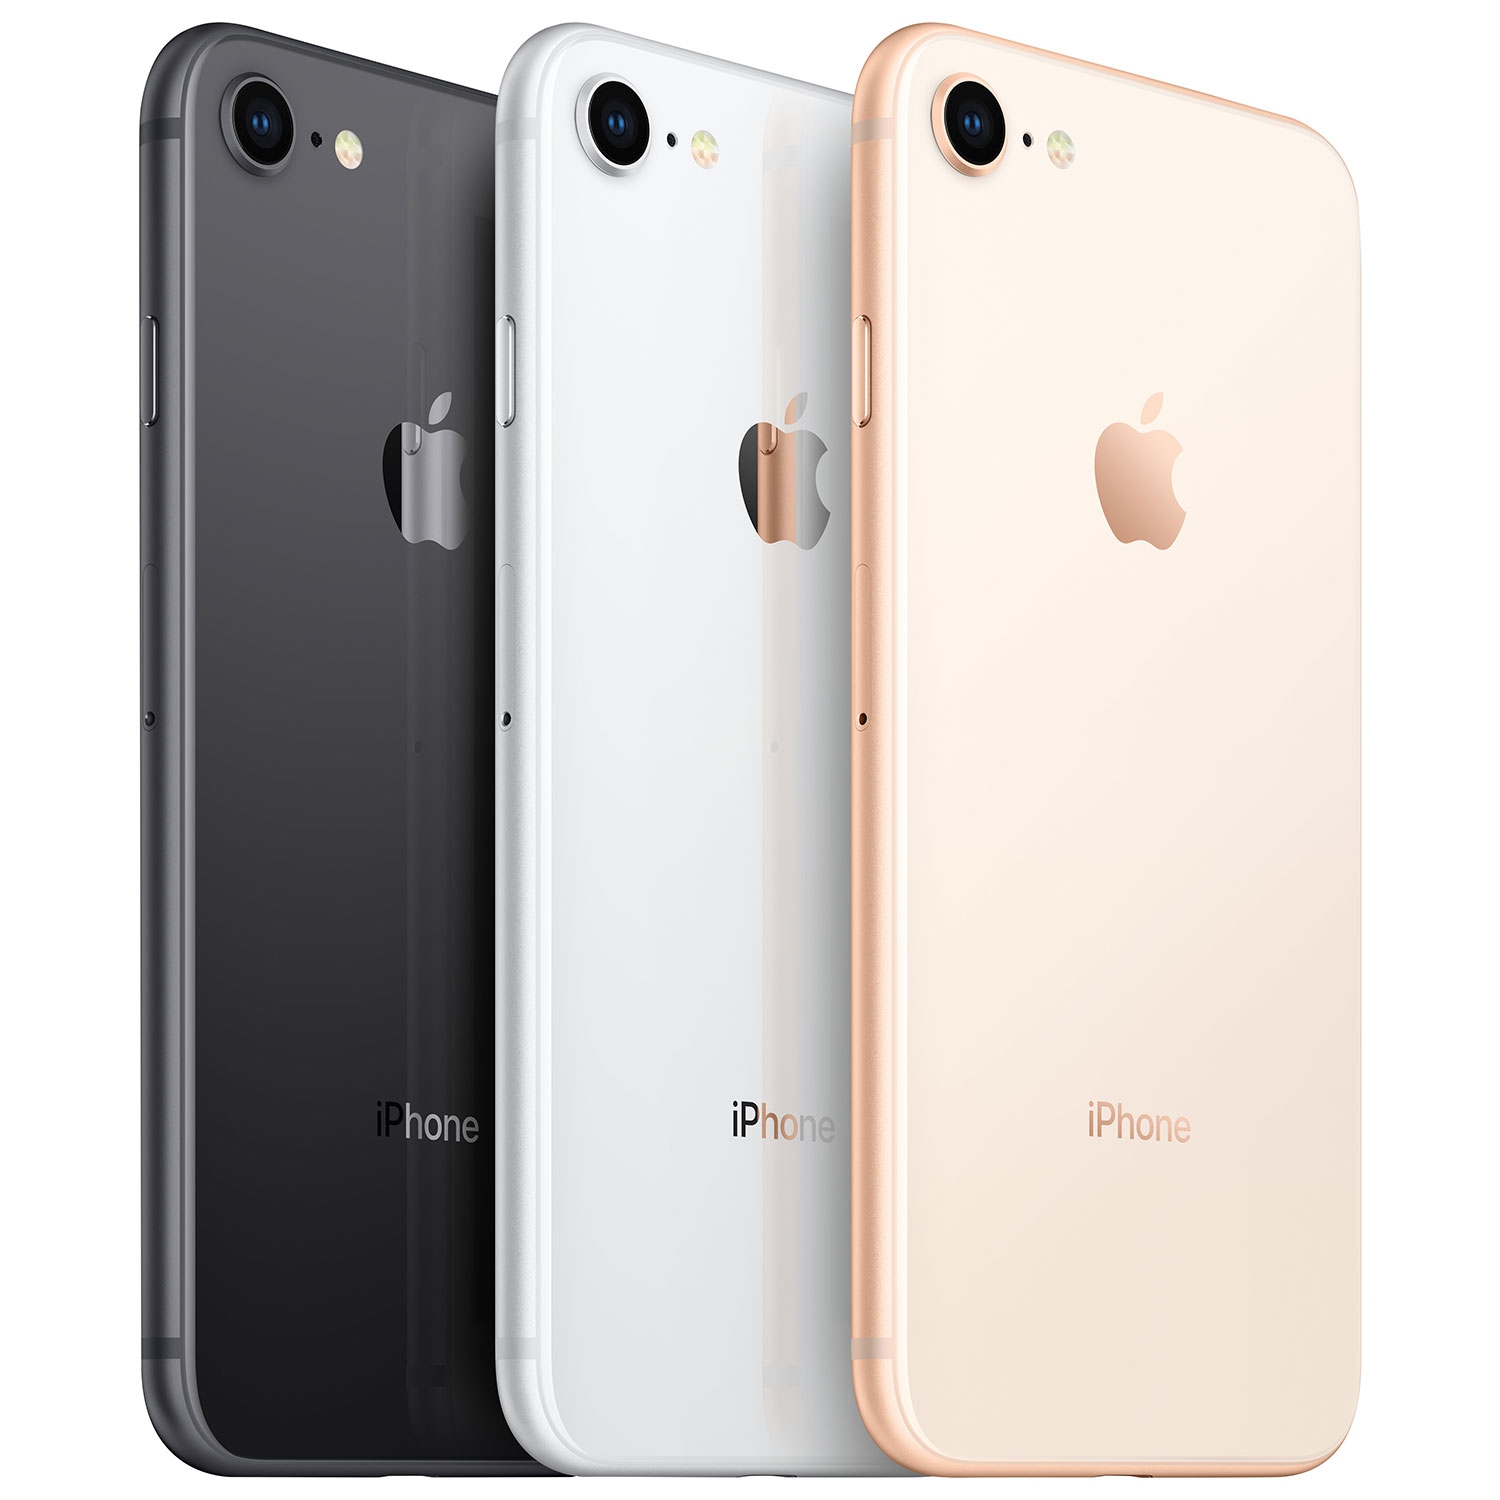 Apple iPhone 8 64GB Smartphone - Silver - Unlocked - Open Box 